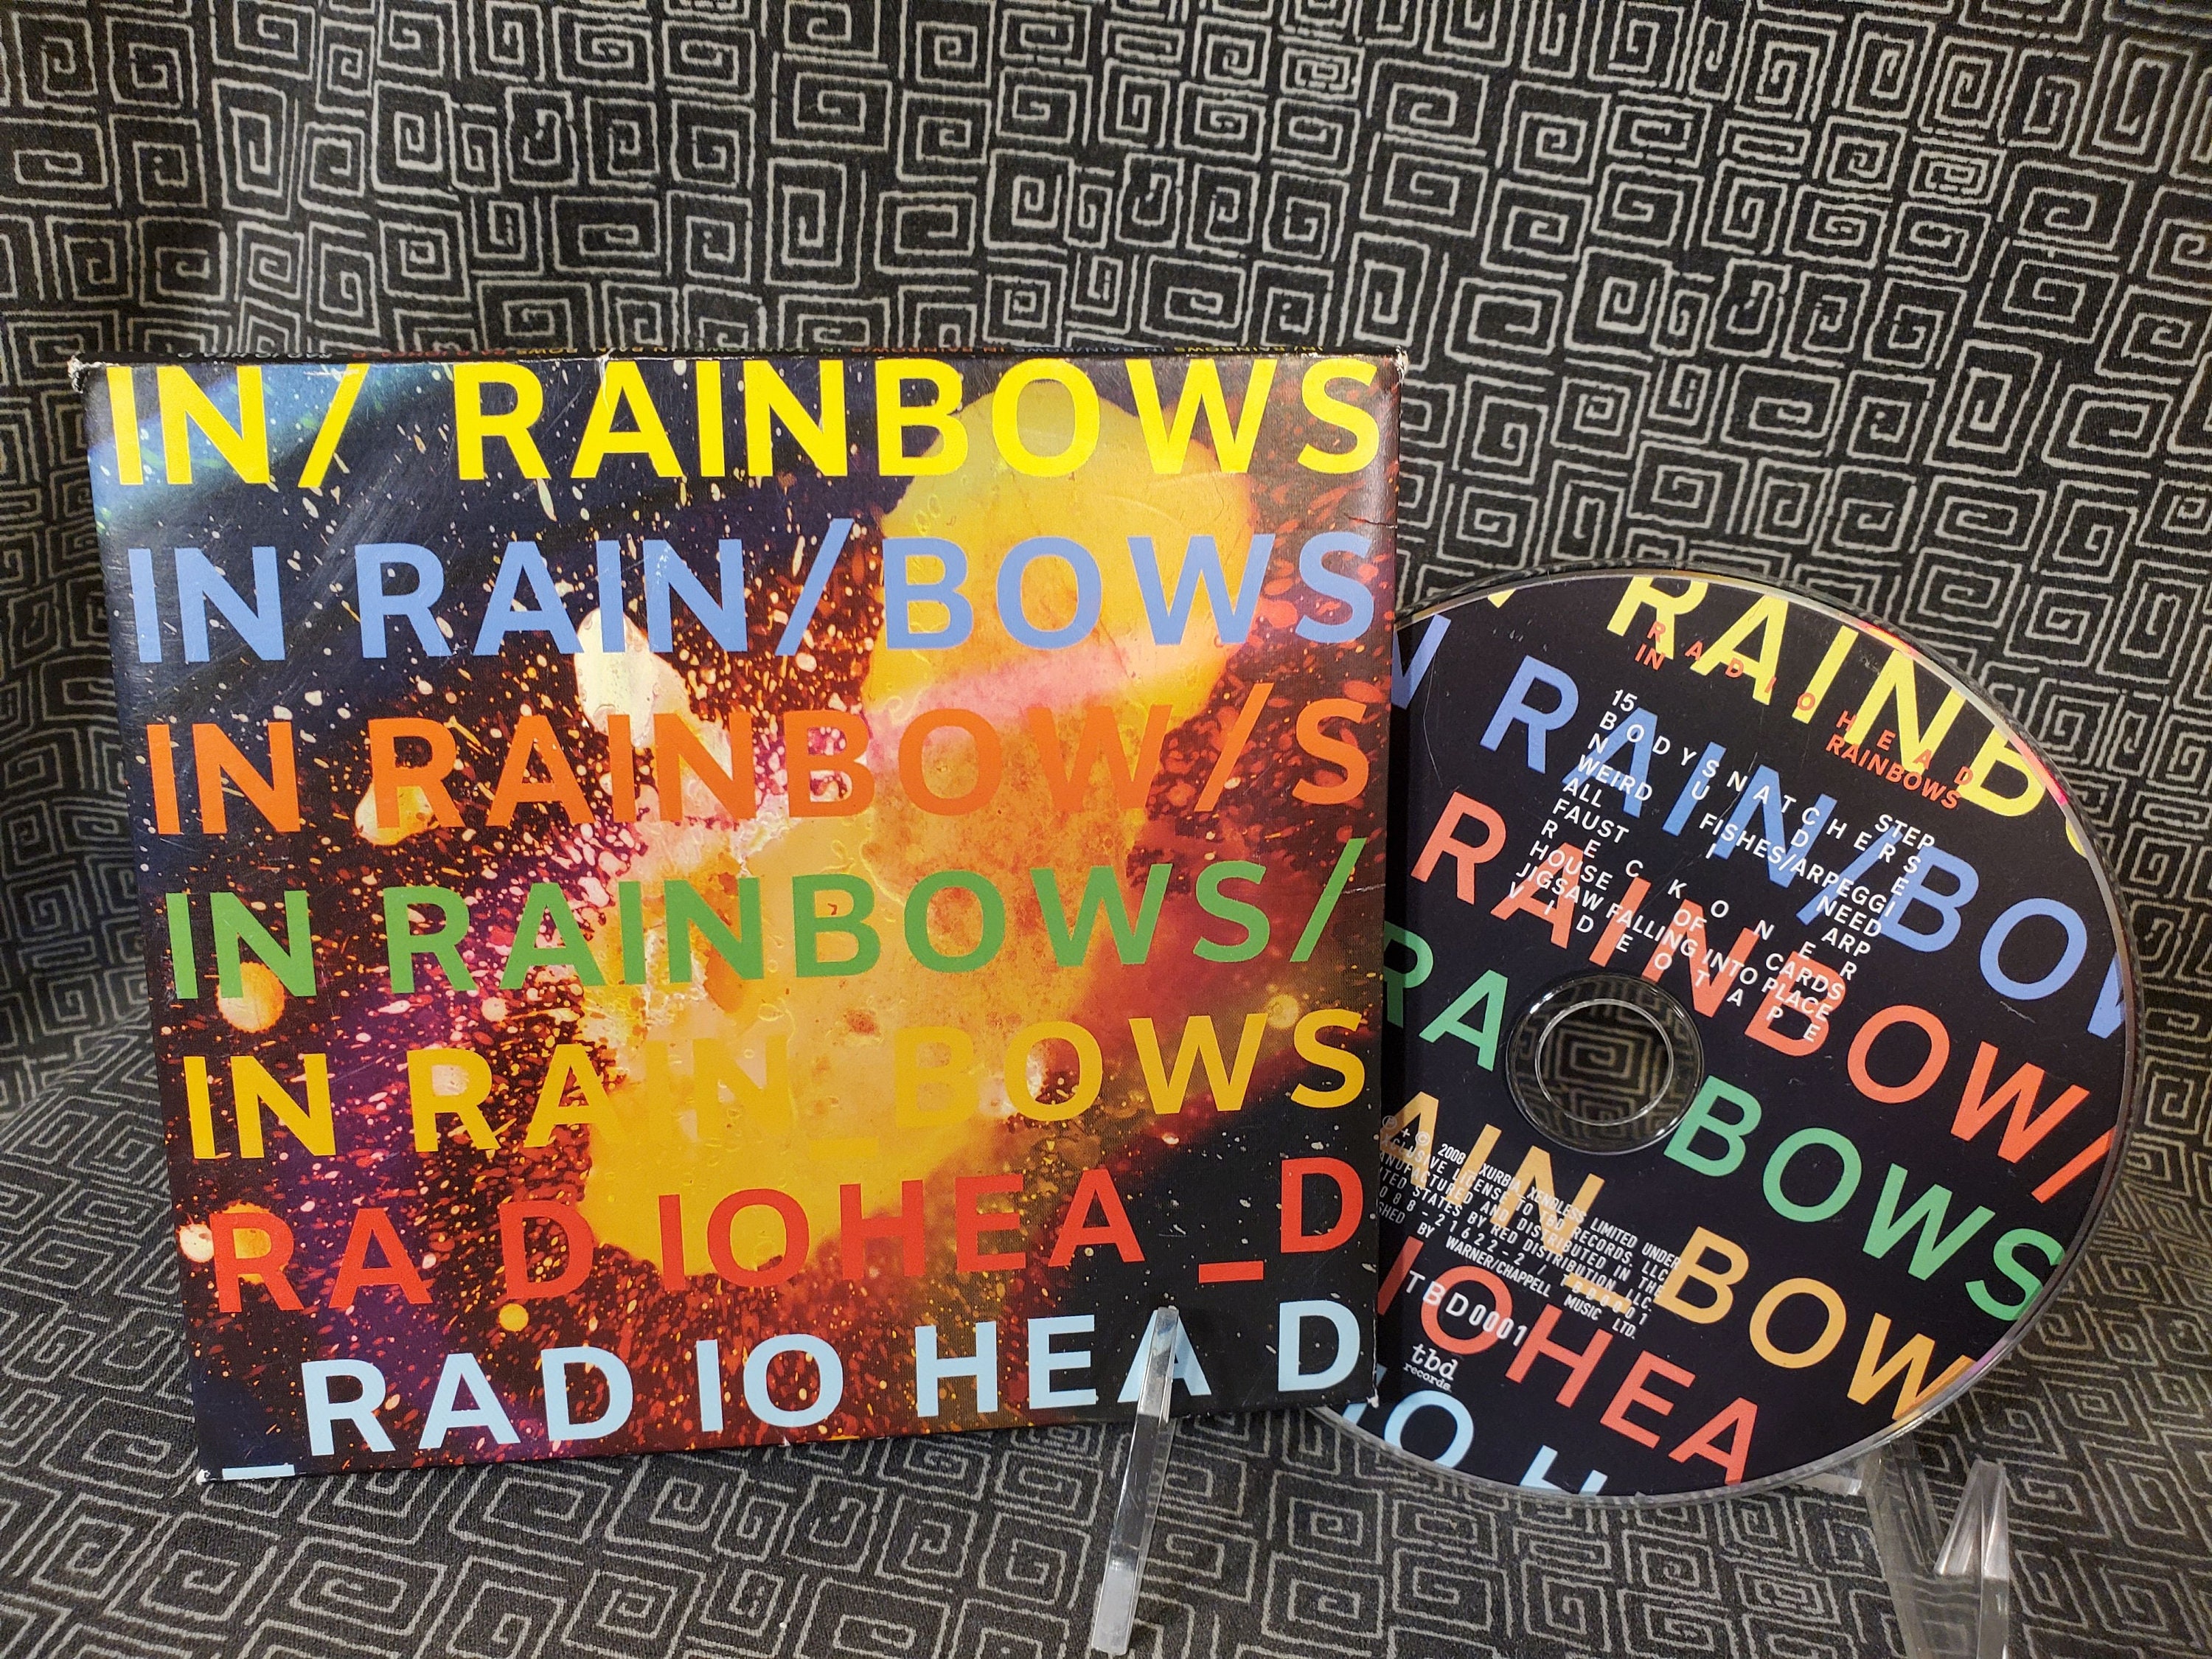 Radiohead in Rainbows CD 